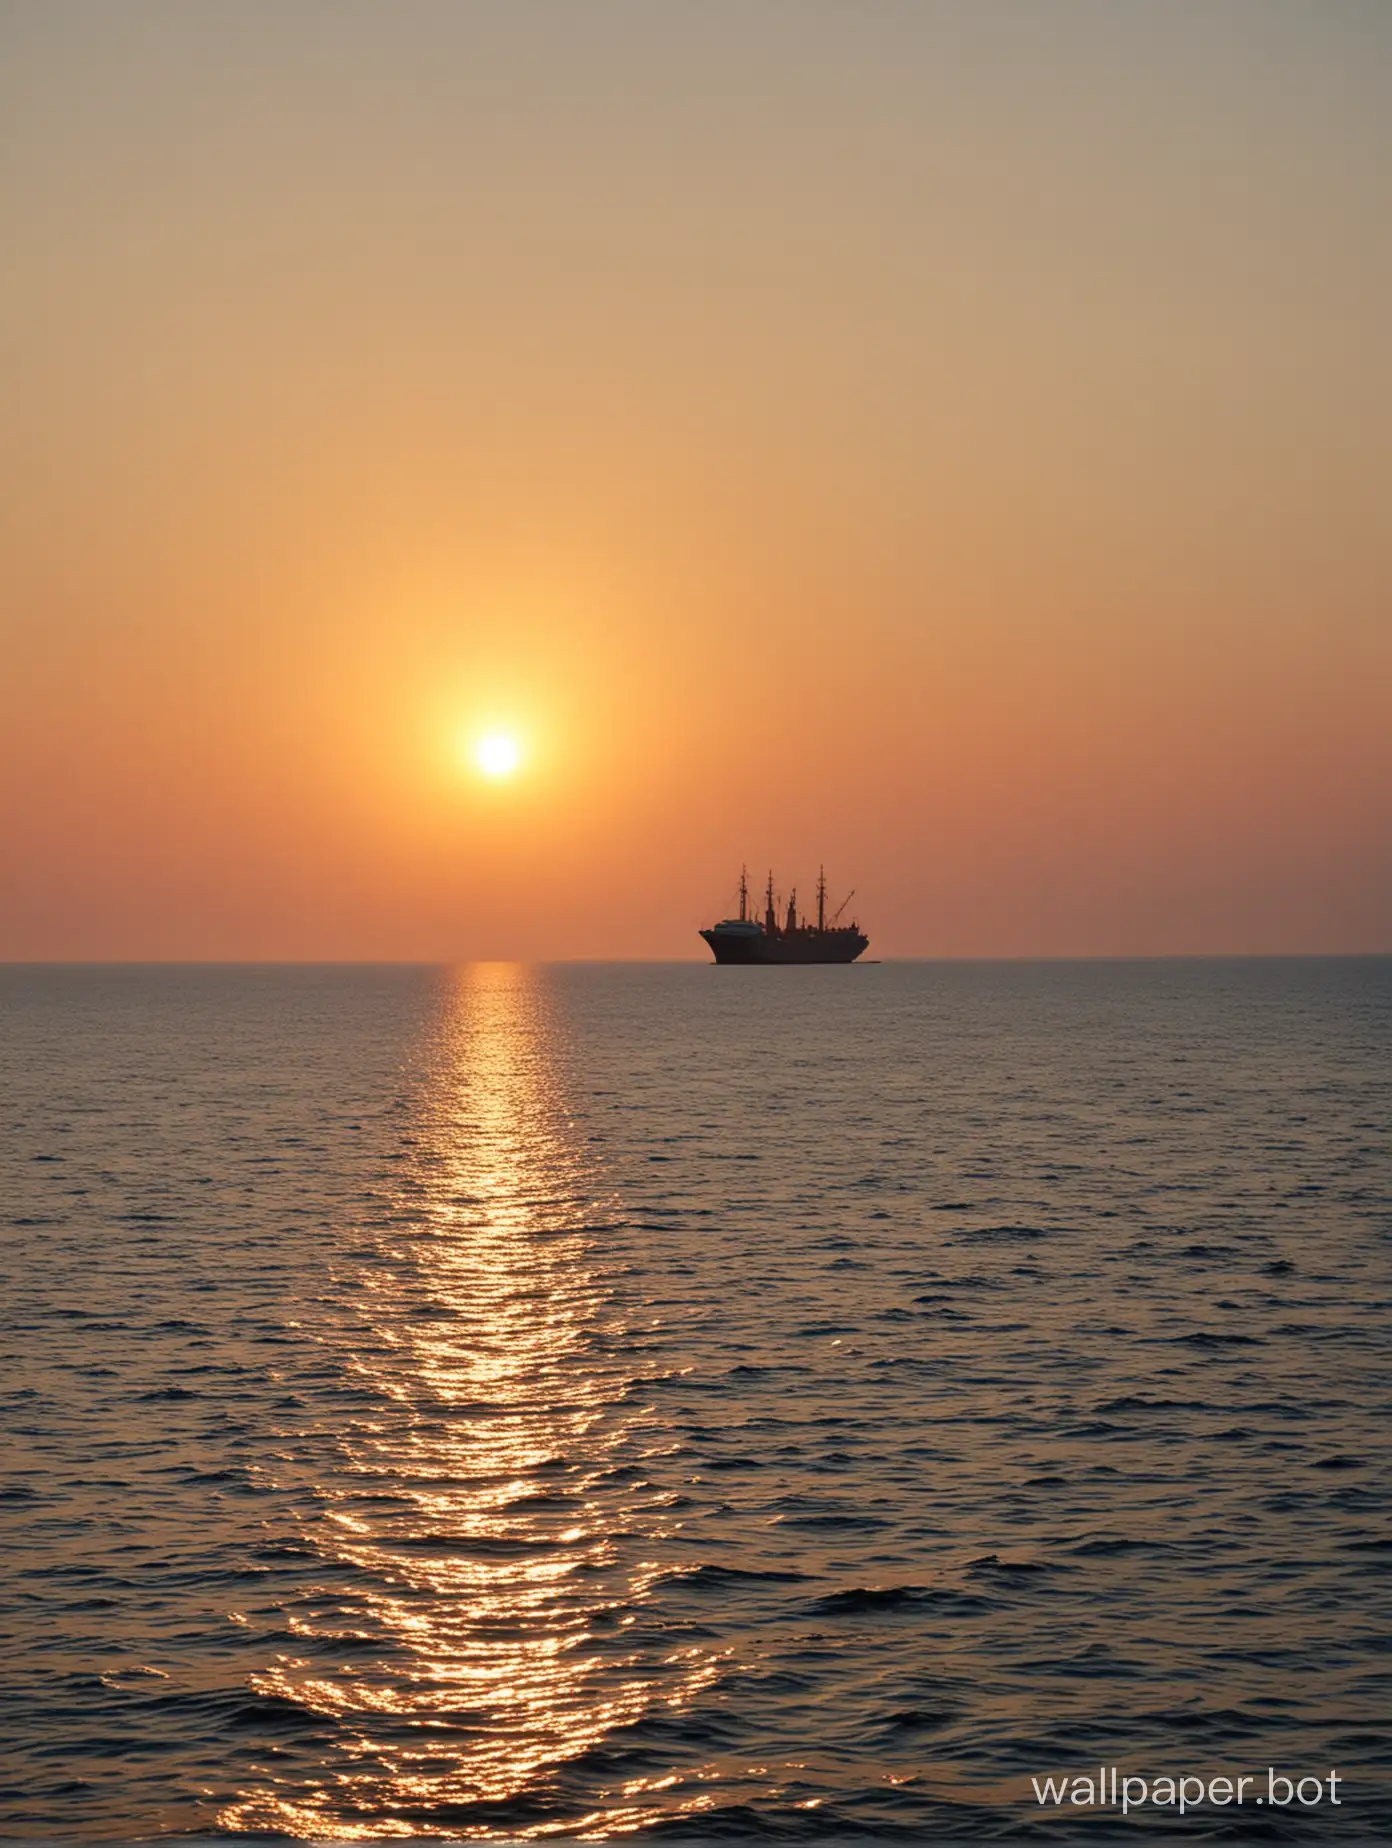 Crimea, sea, sunset, a ship in the distance